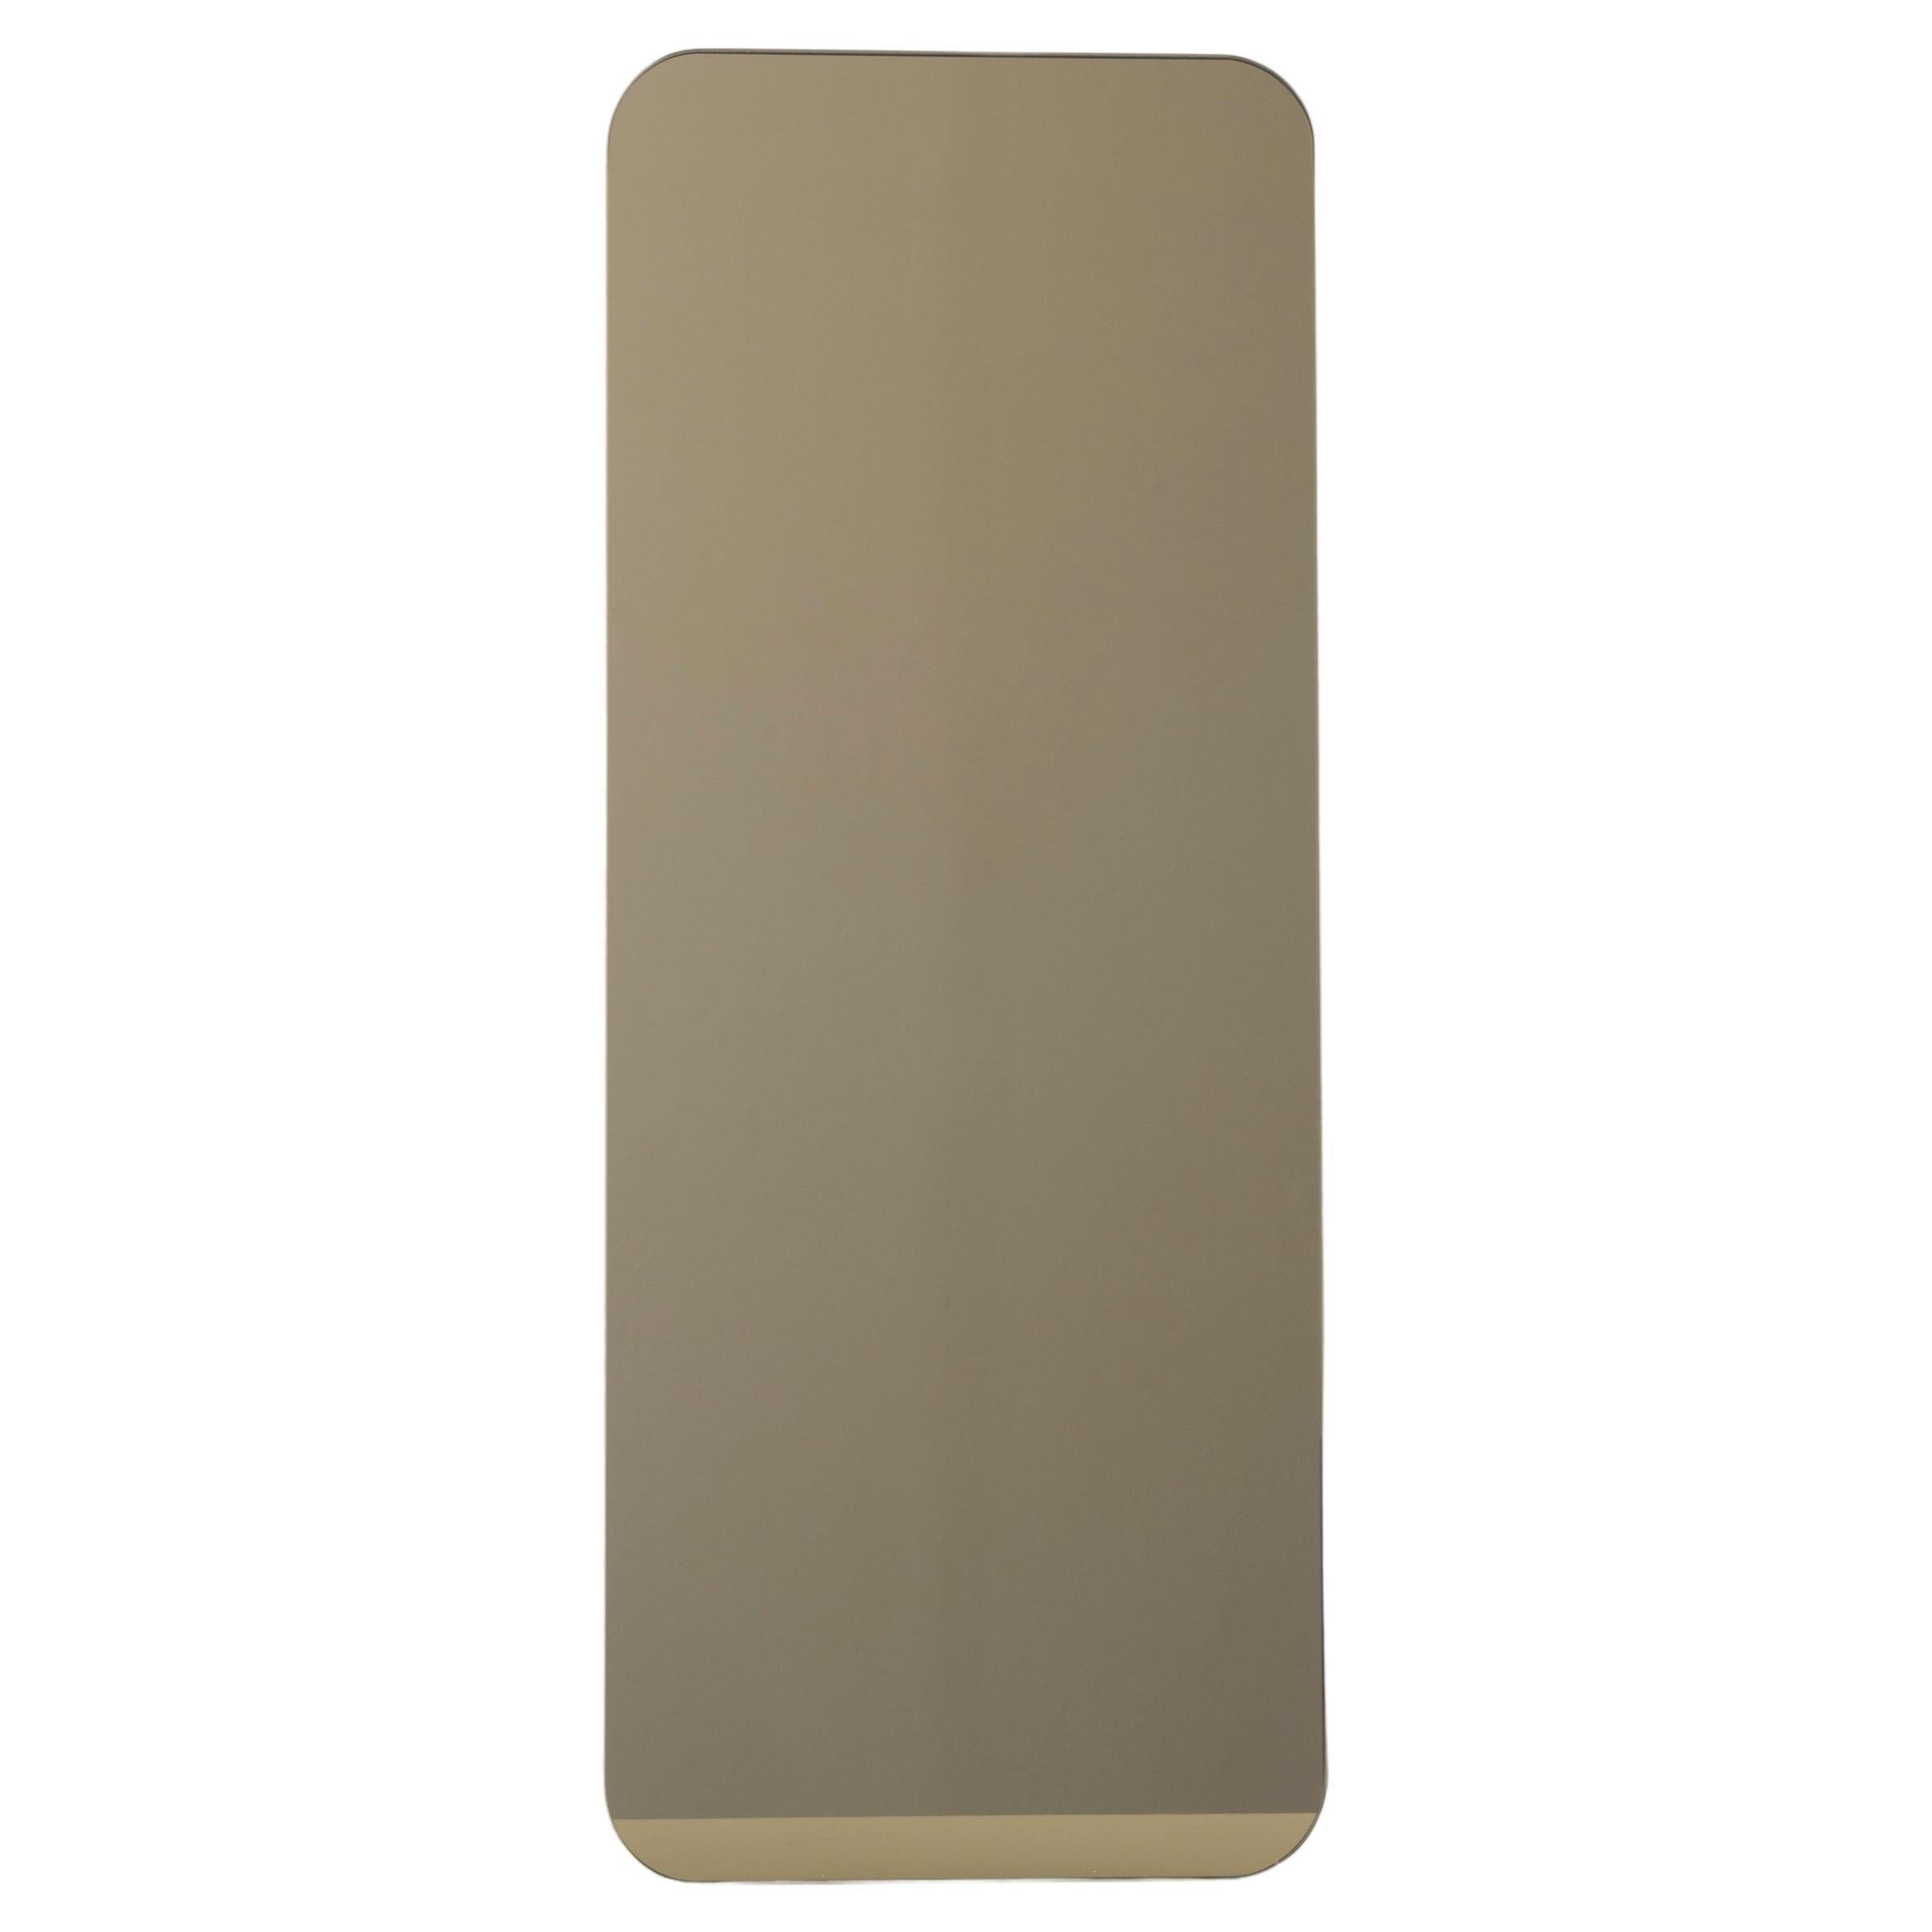 Quadris Bronze Rechteckiger Rahmenloser Moderner Spiegel, Medium